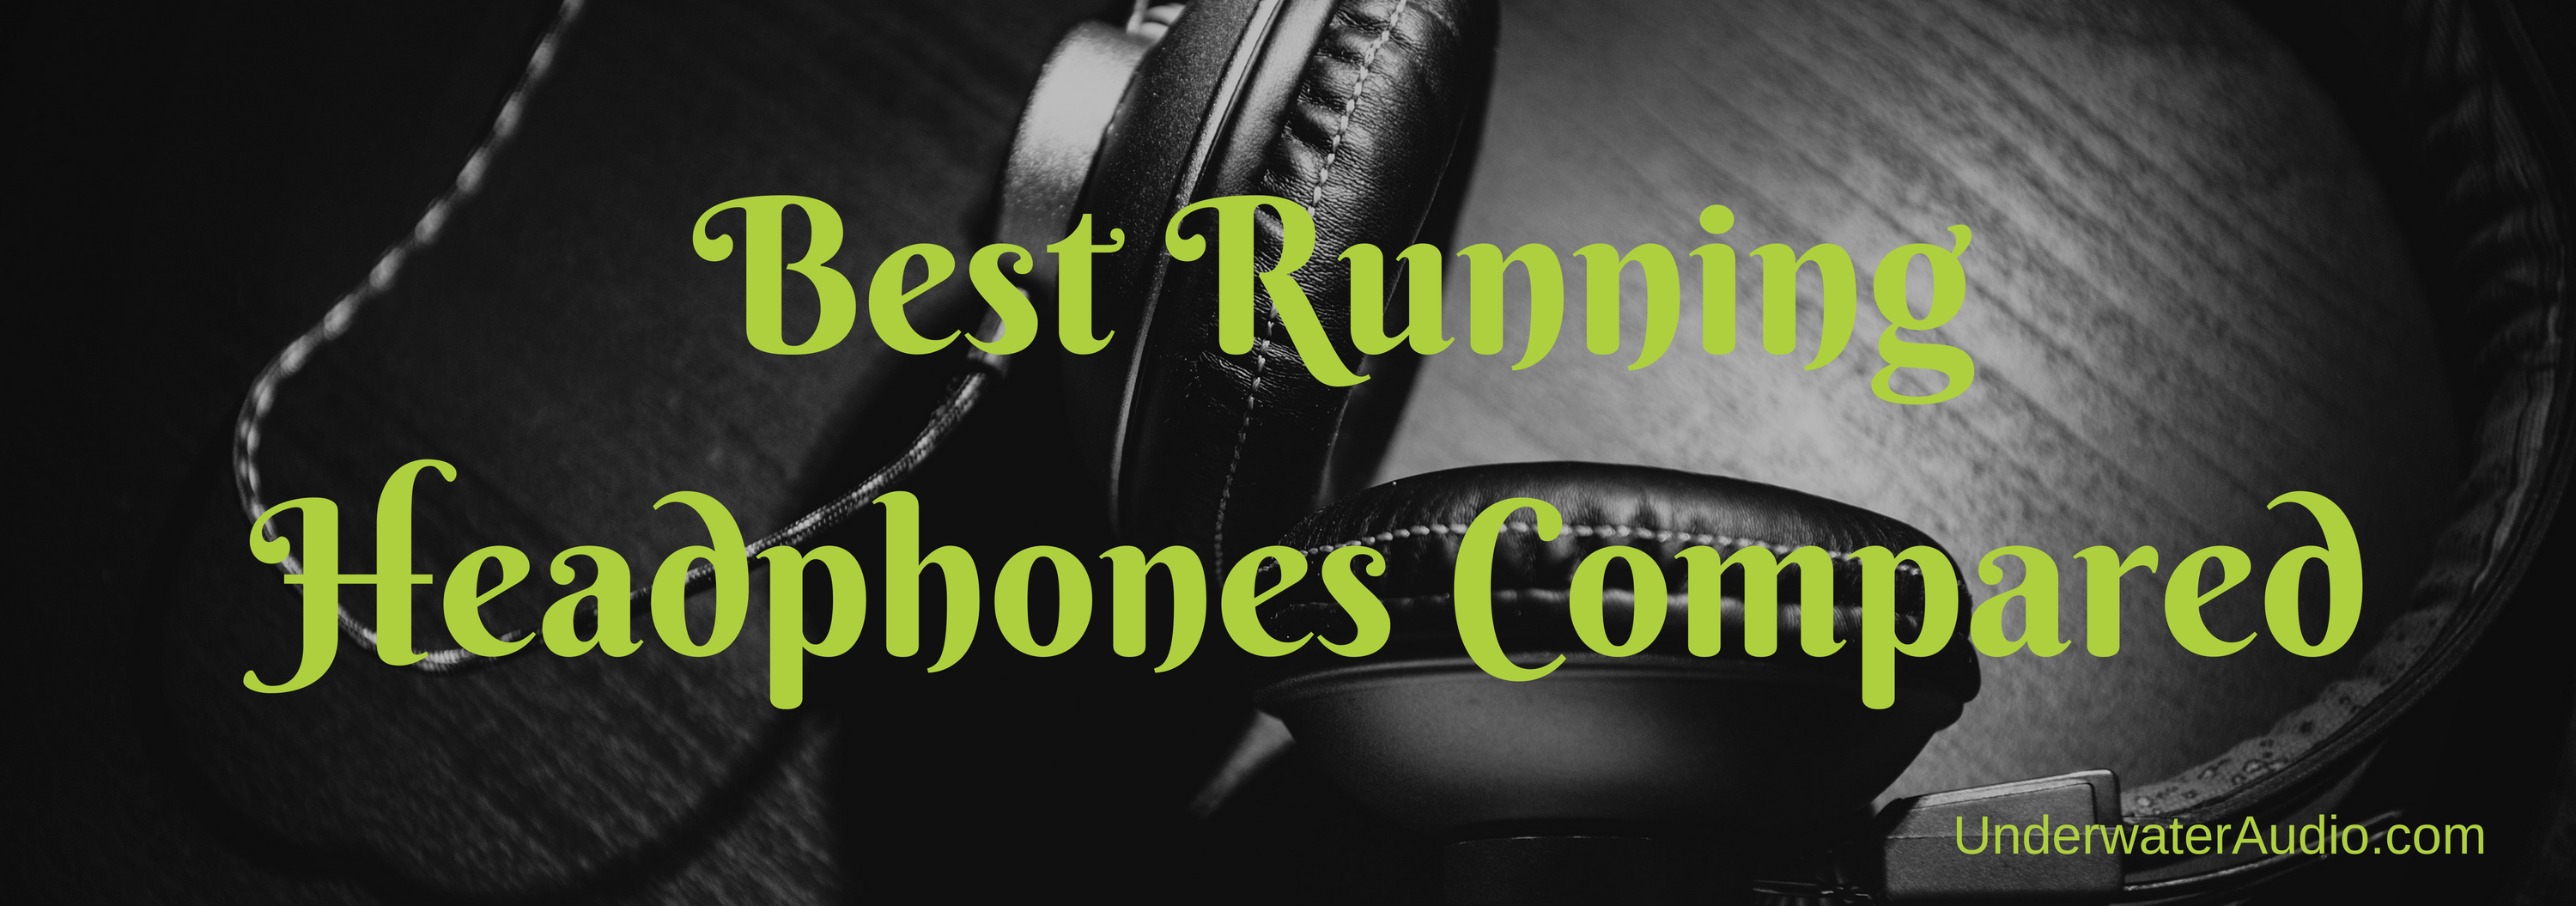 Best Running Headphones Compared [2016 Edition]